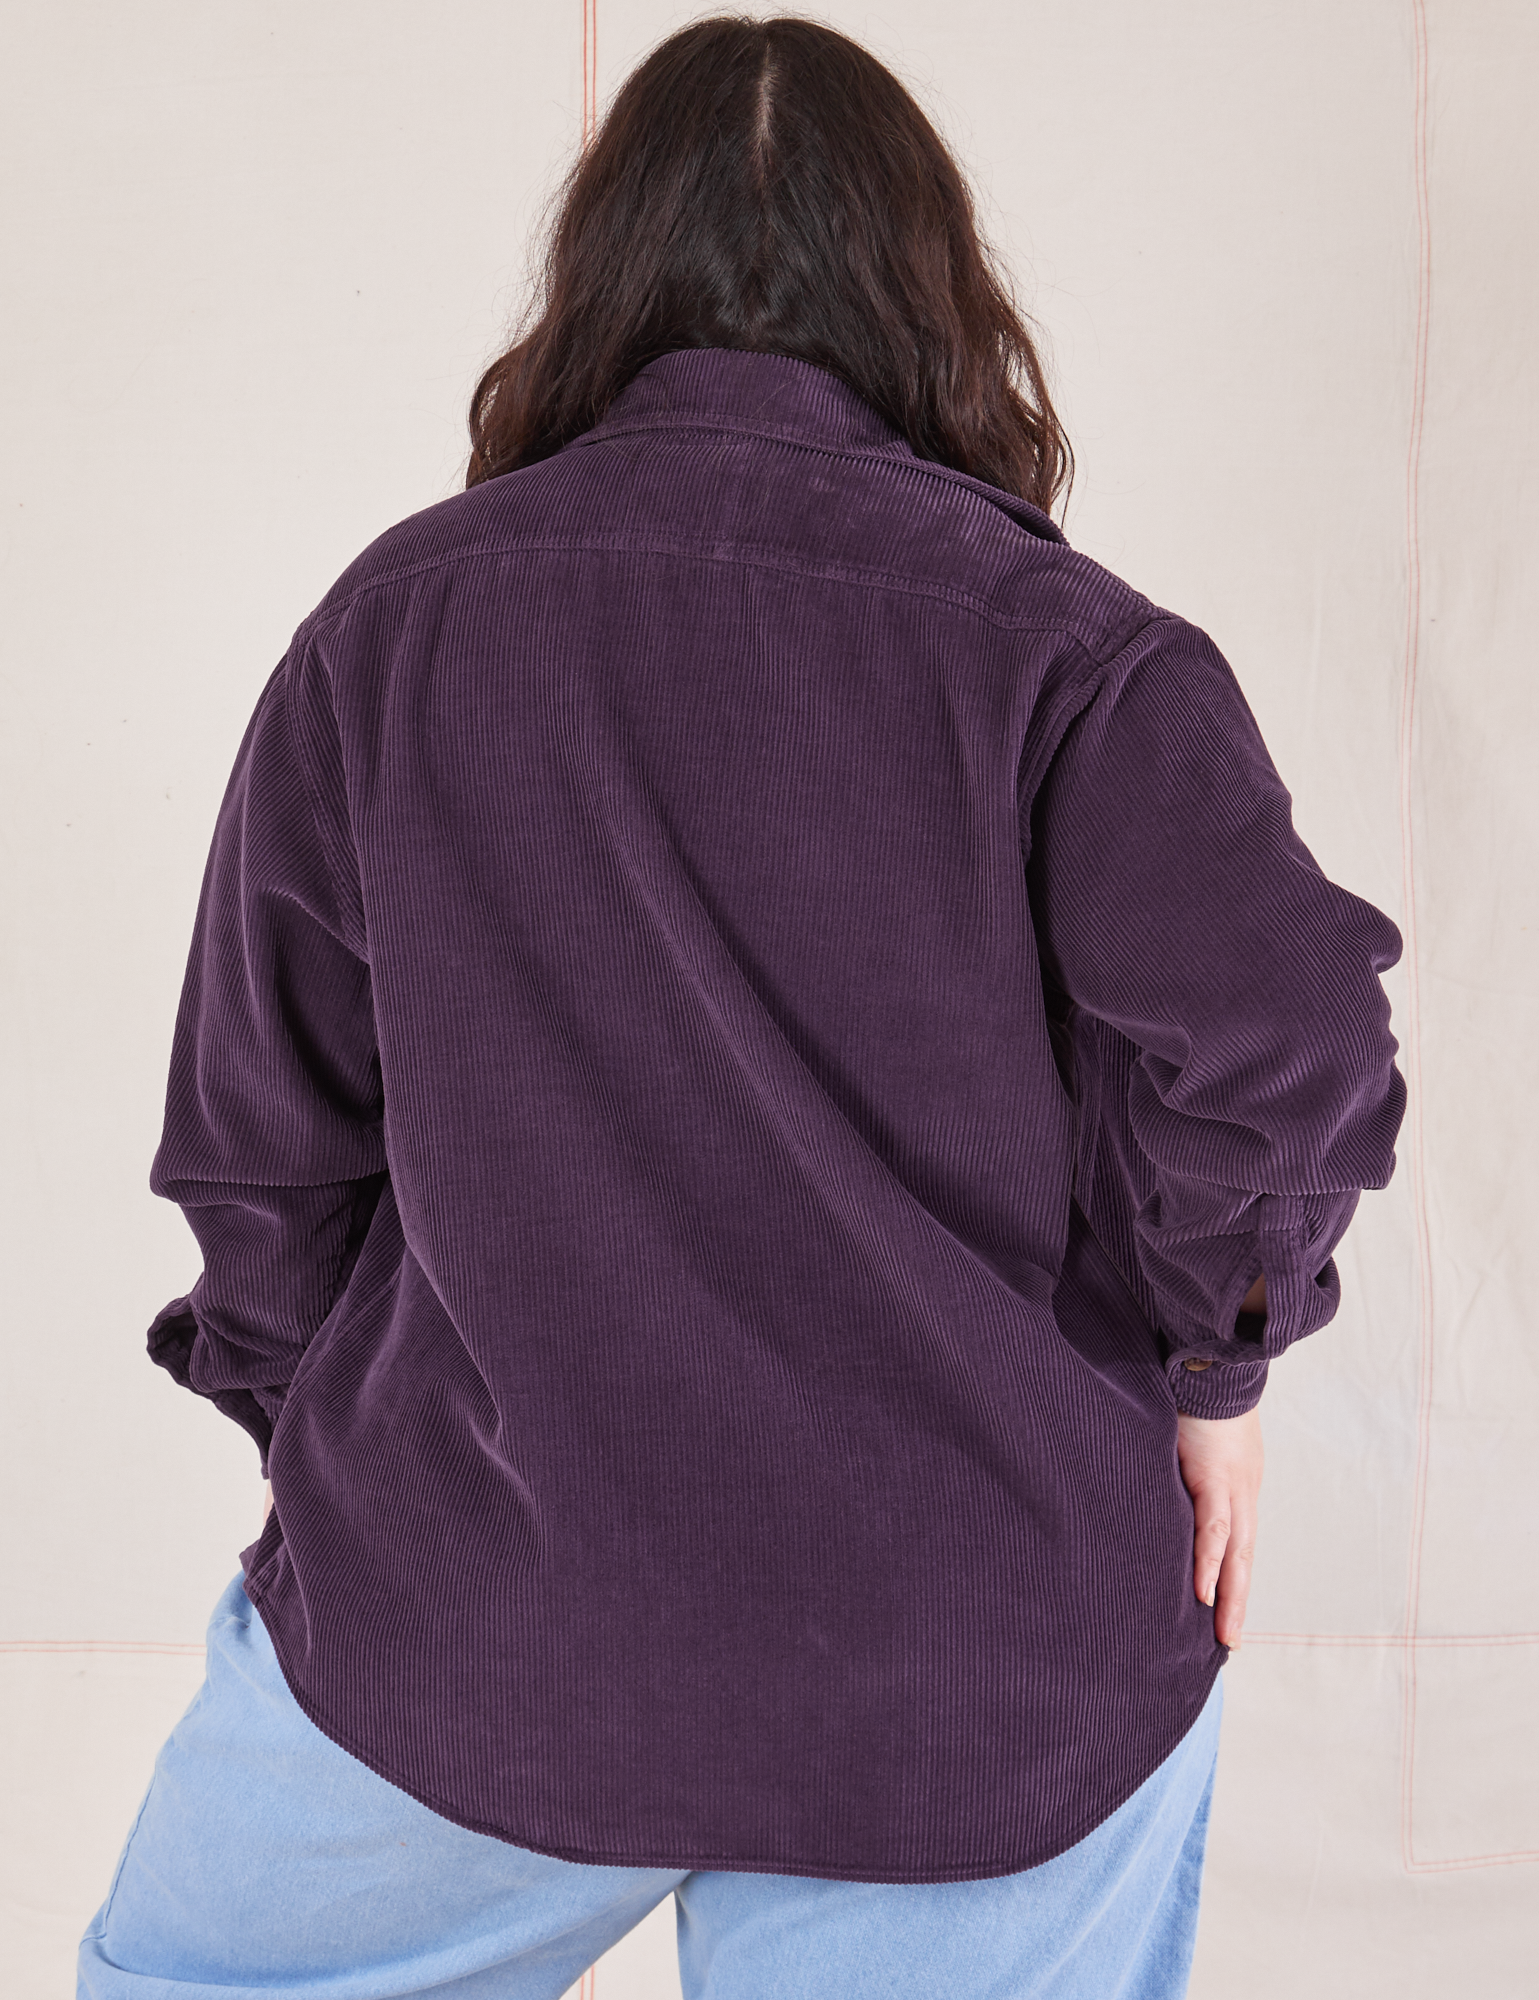 Back view of Corduroy Overshirt in Nebula Purple on Ashley